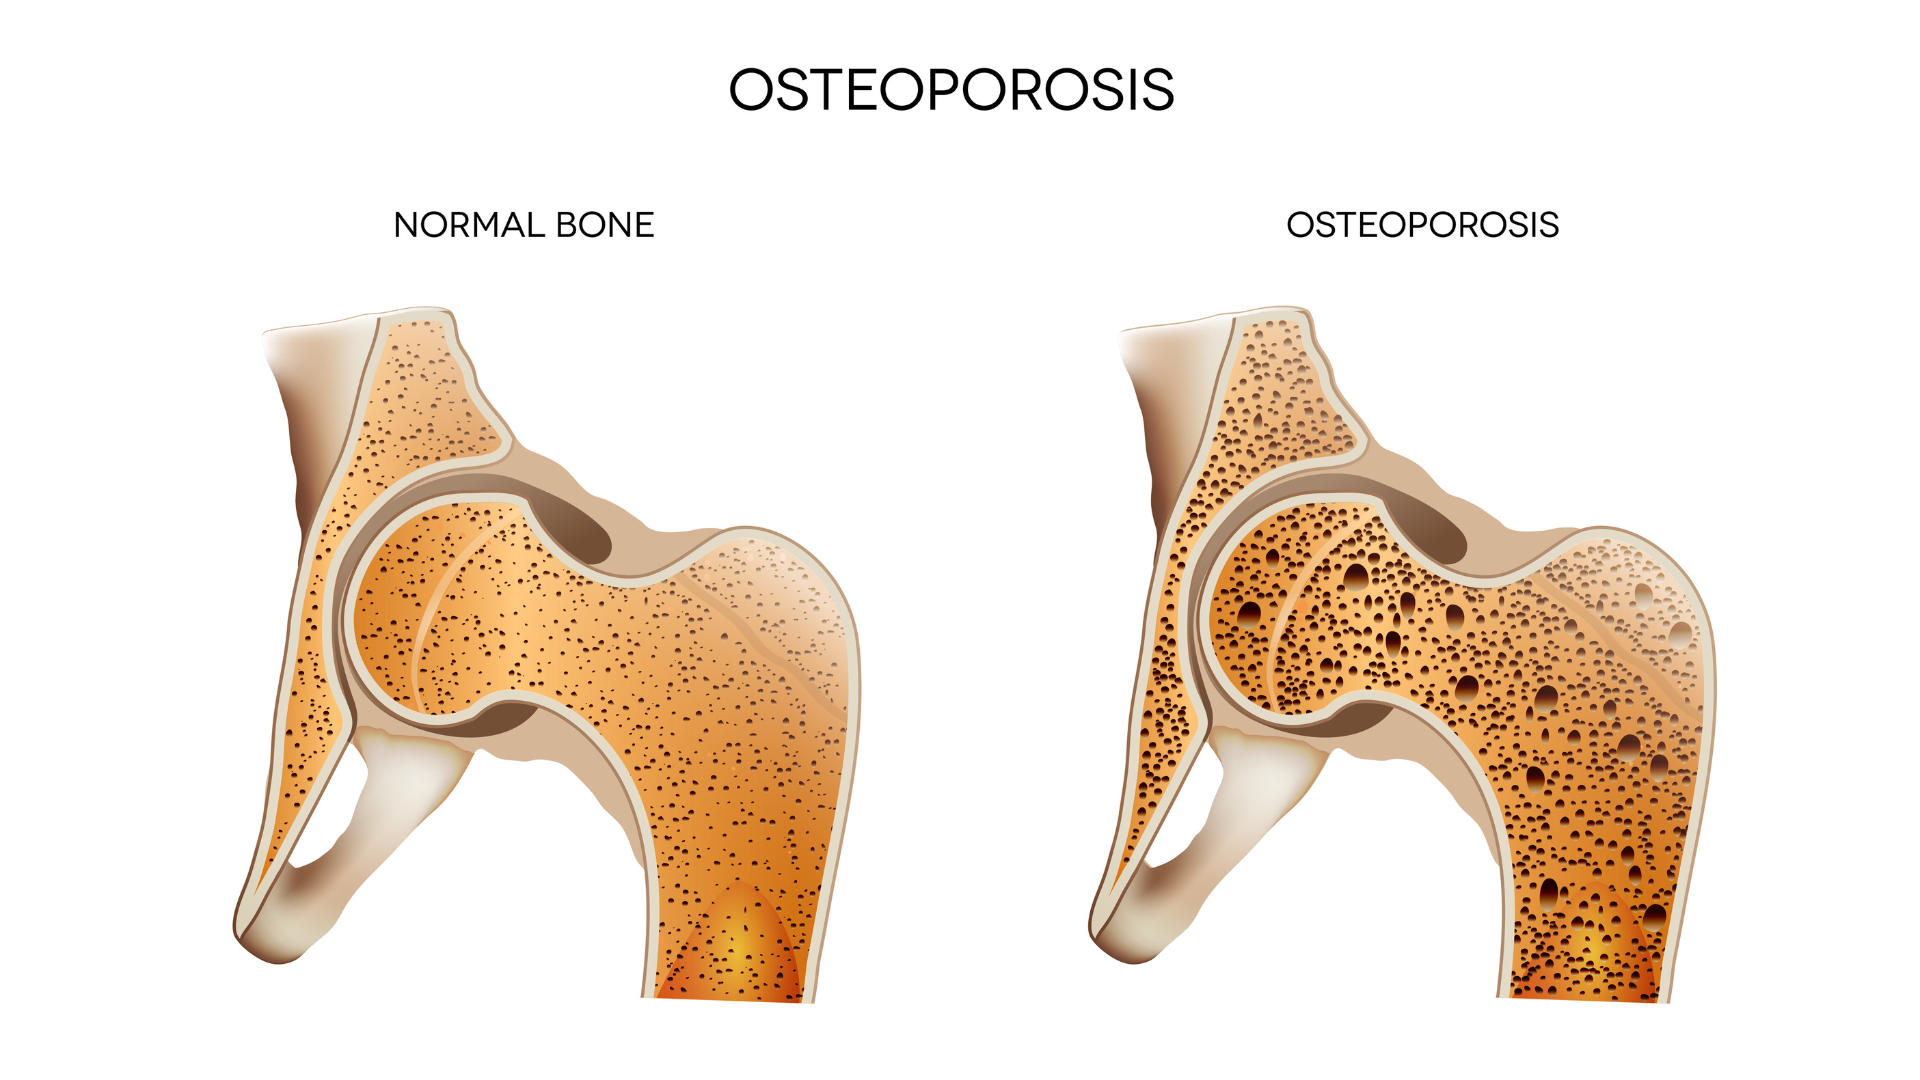 Anatomy illustration showing healthy bone and osteoporosis bone.